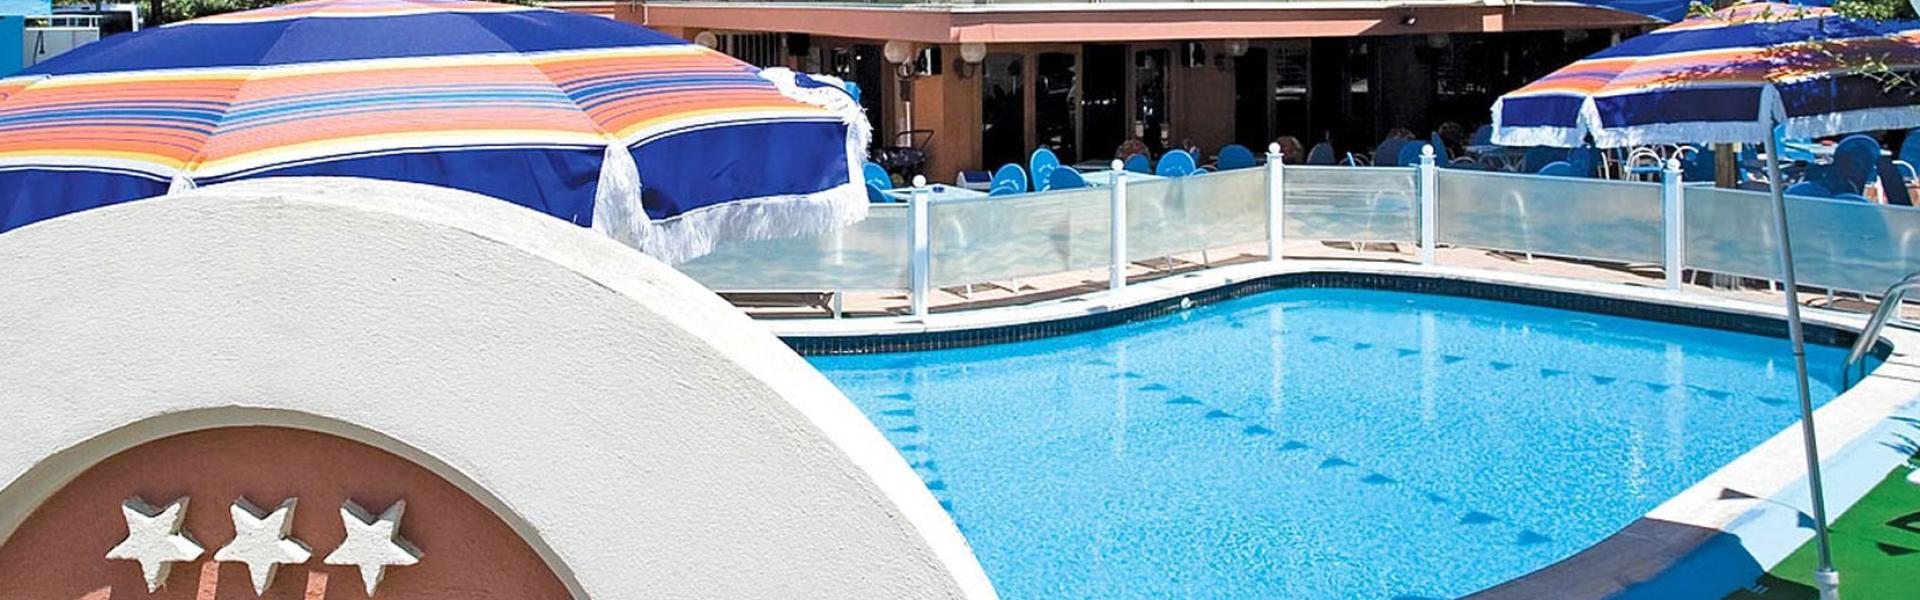 hotelzenith.unionhotels en cervia-hotel-zenith-swimming-pool 003